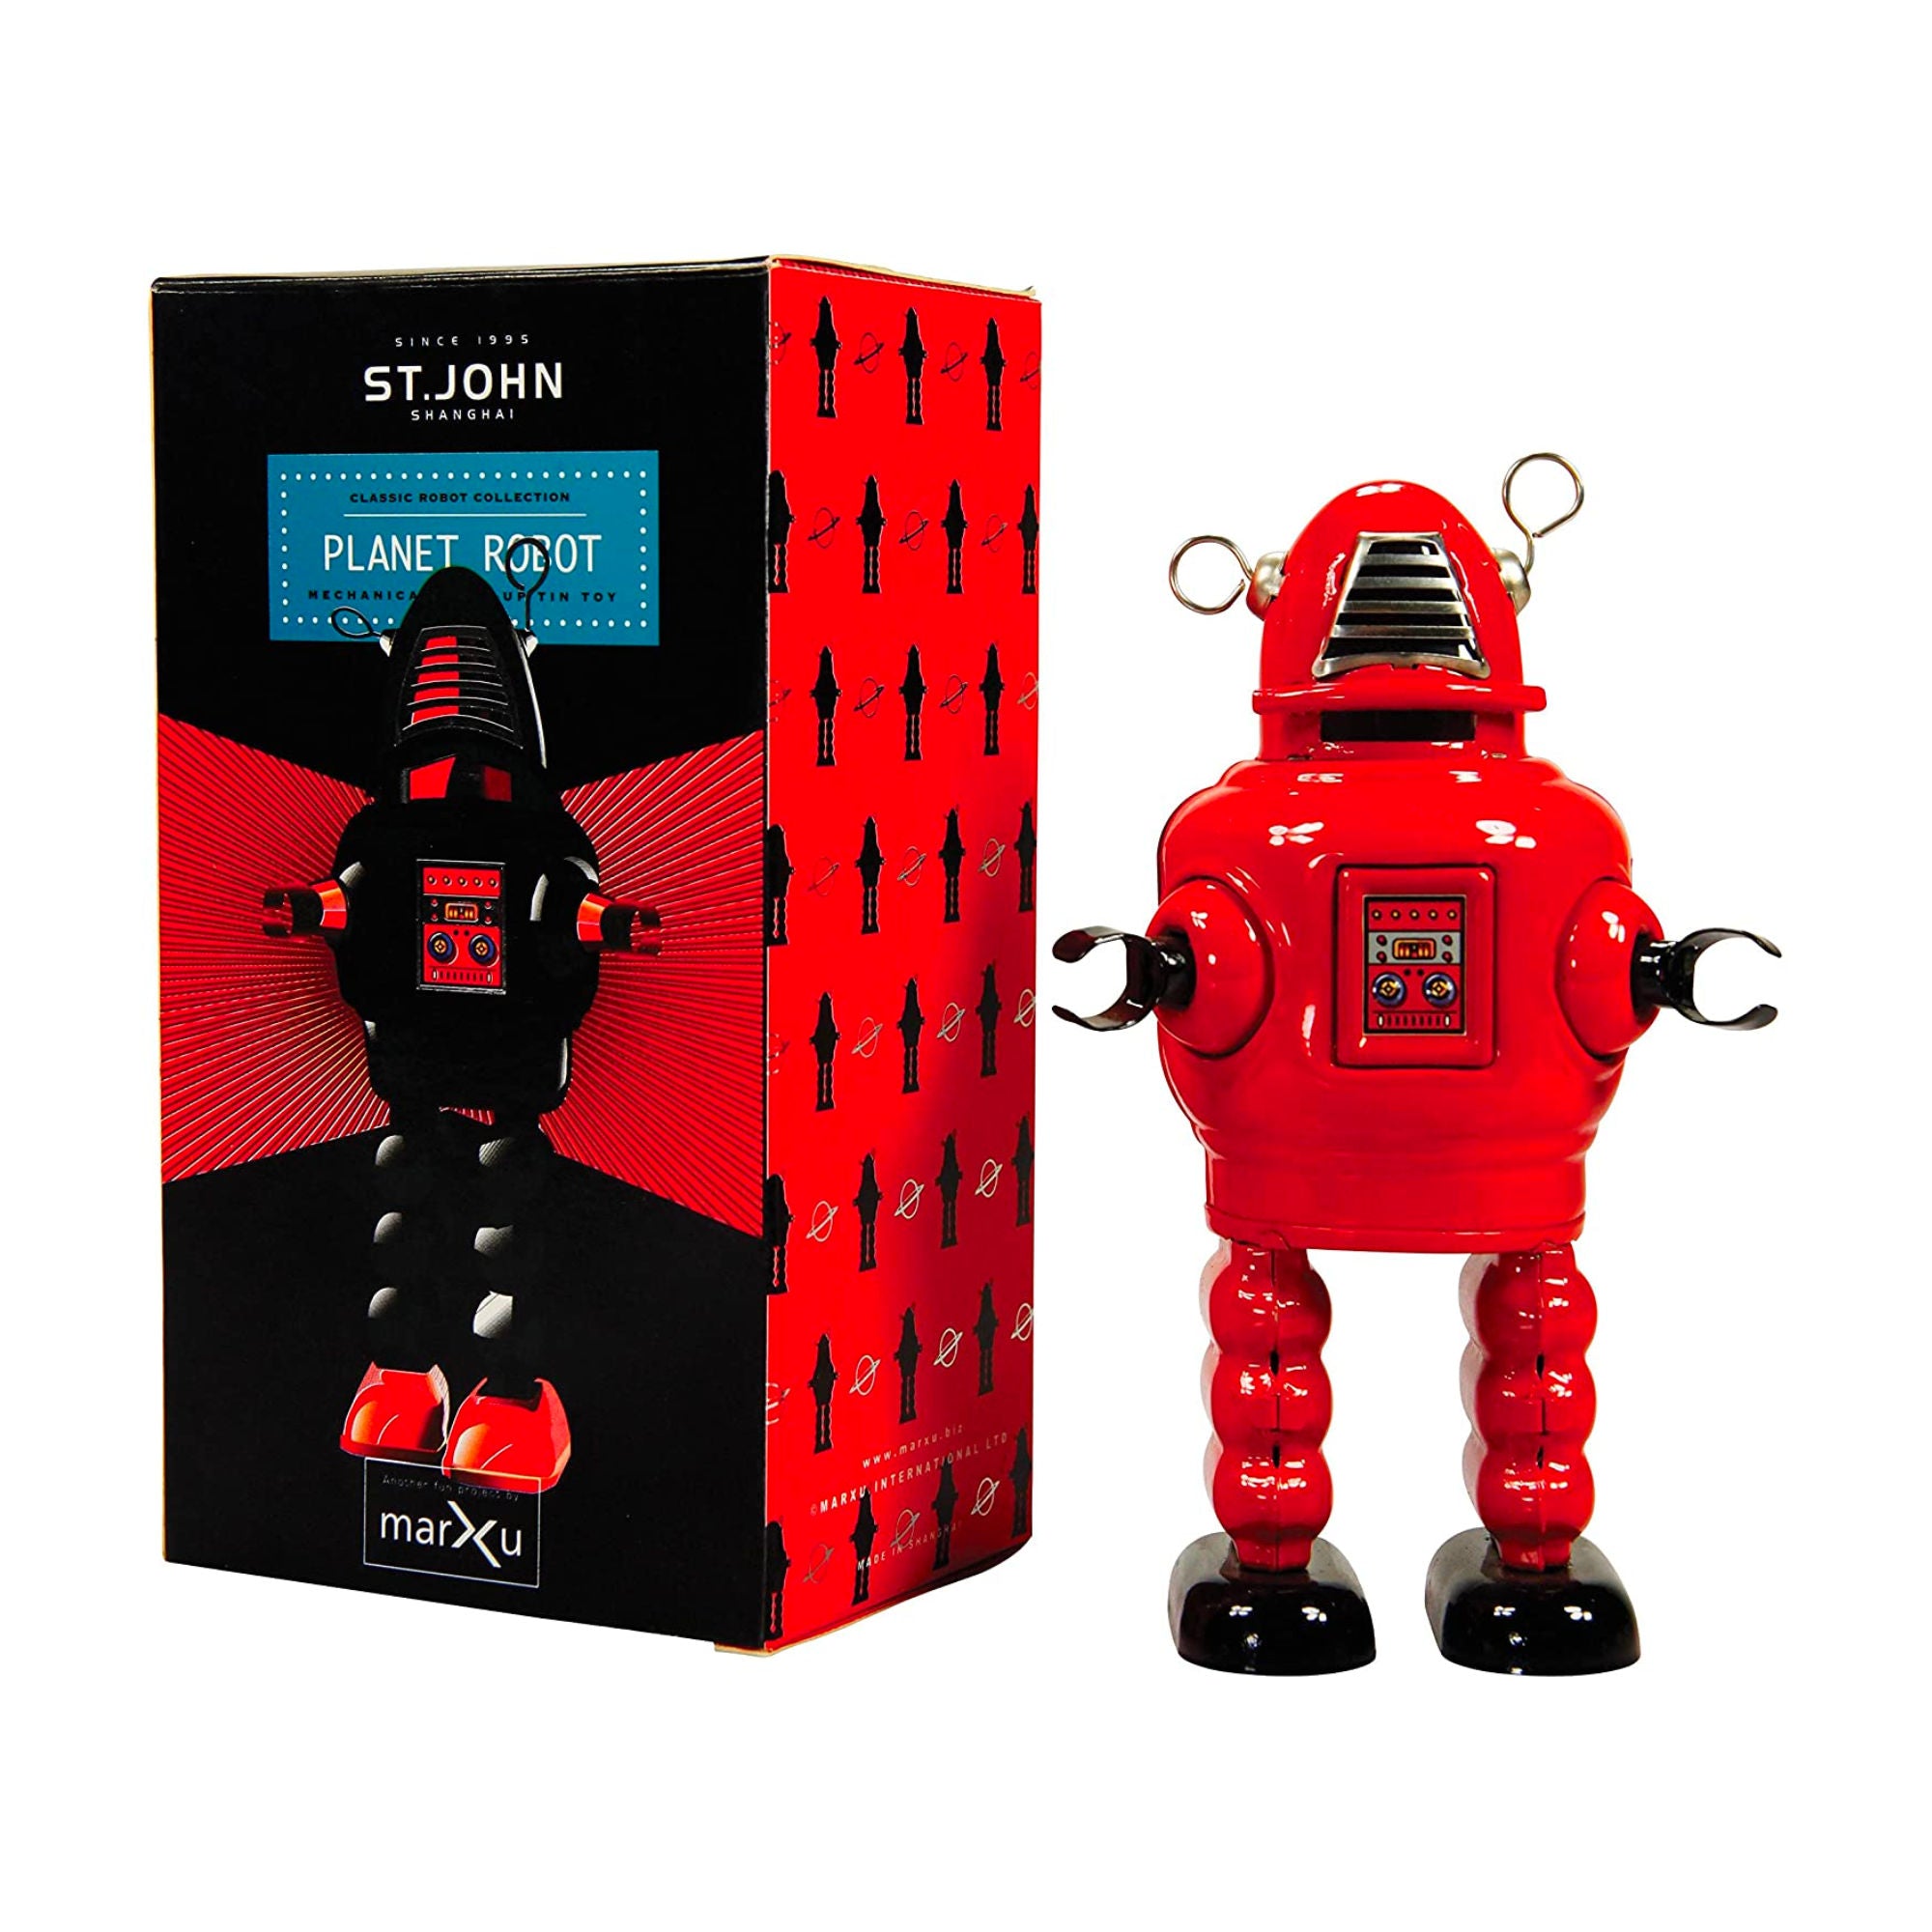 Saint John Planet Robot Windup Toy